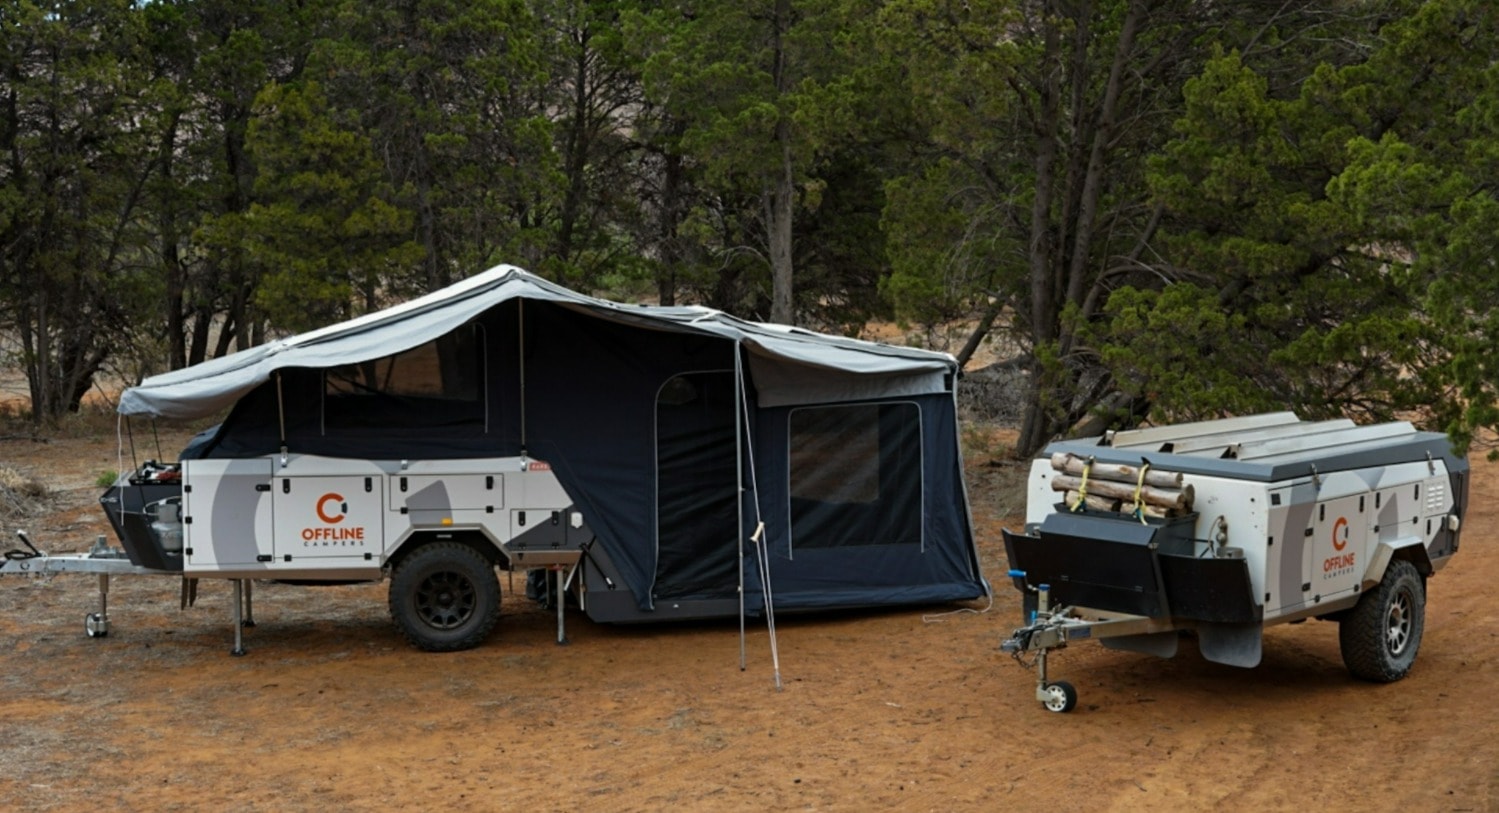 Tiny Car Camping Systems : Microlino Camper